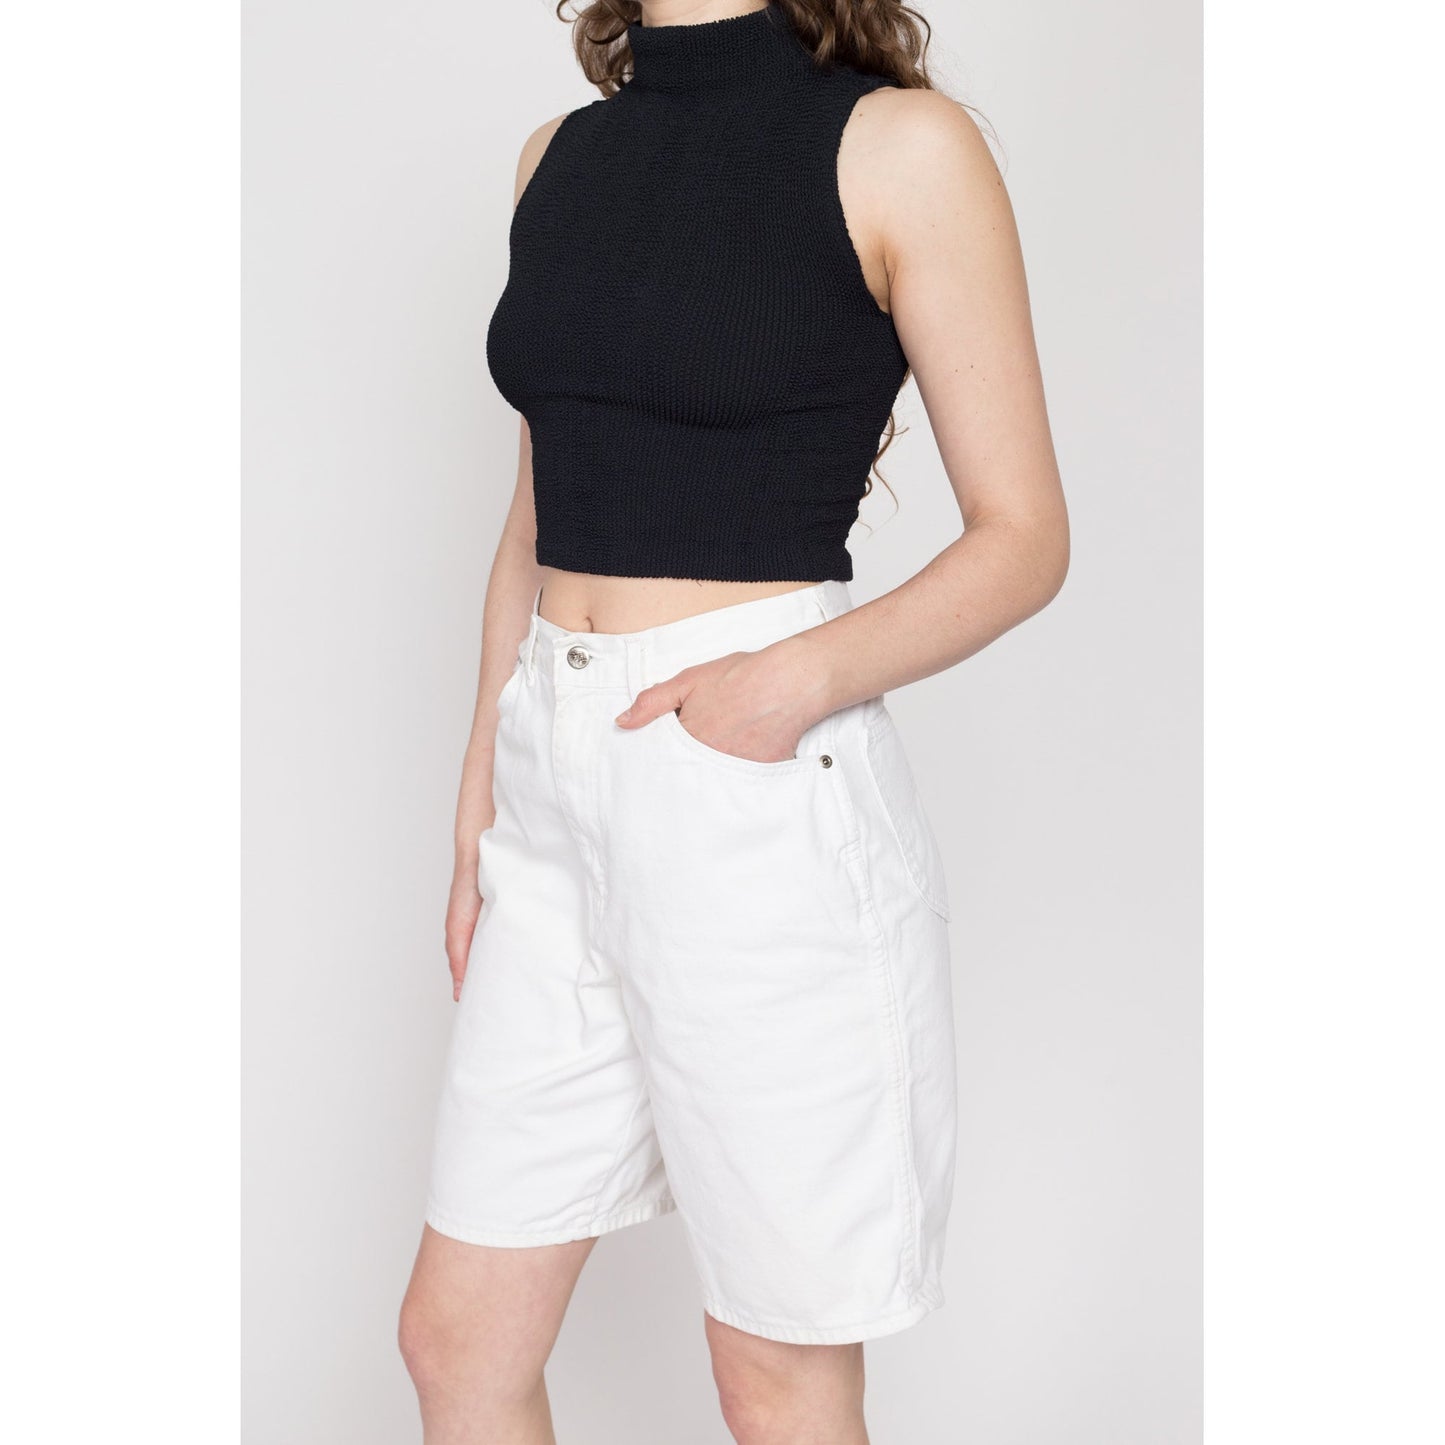 Medium 80s White Long Inseam Jean Shorts 28.5" | Vintage Chic High Waisted Denim Shorts